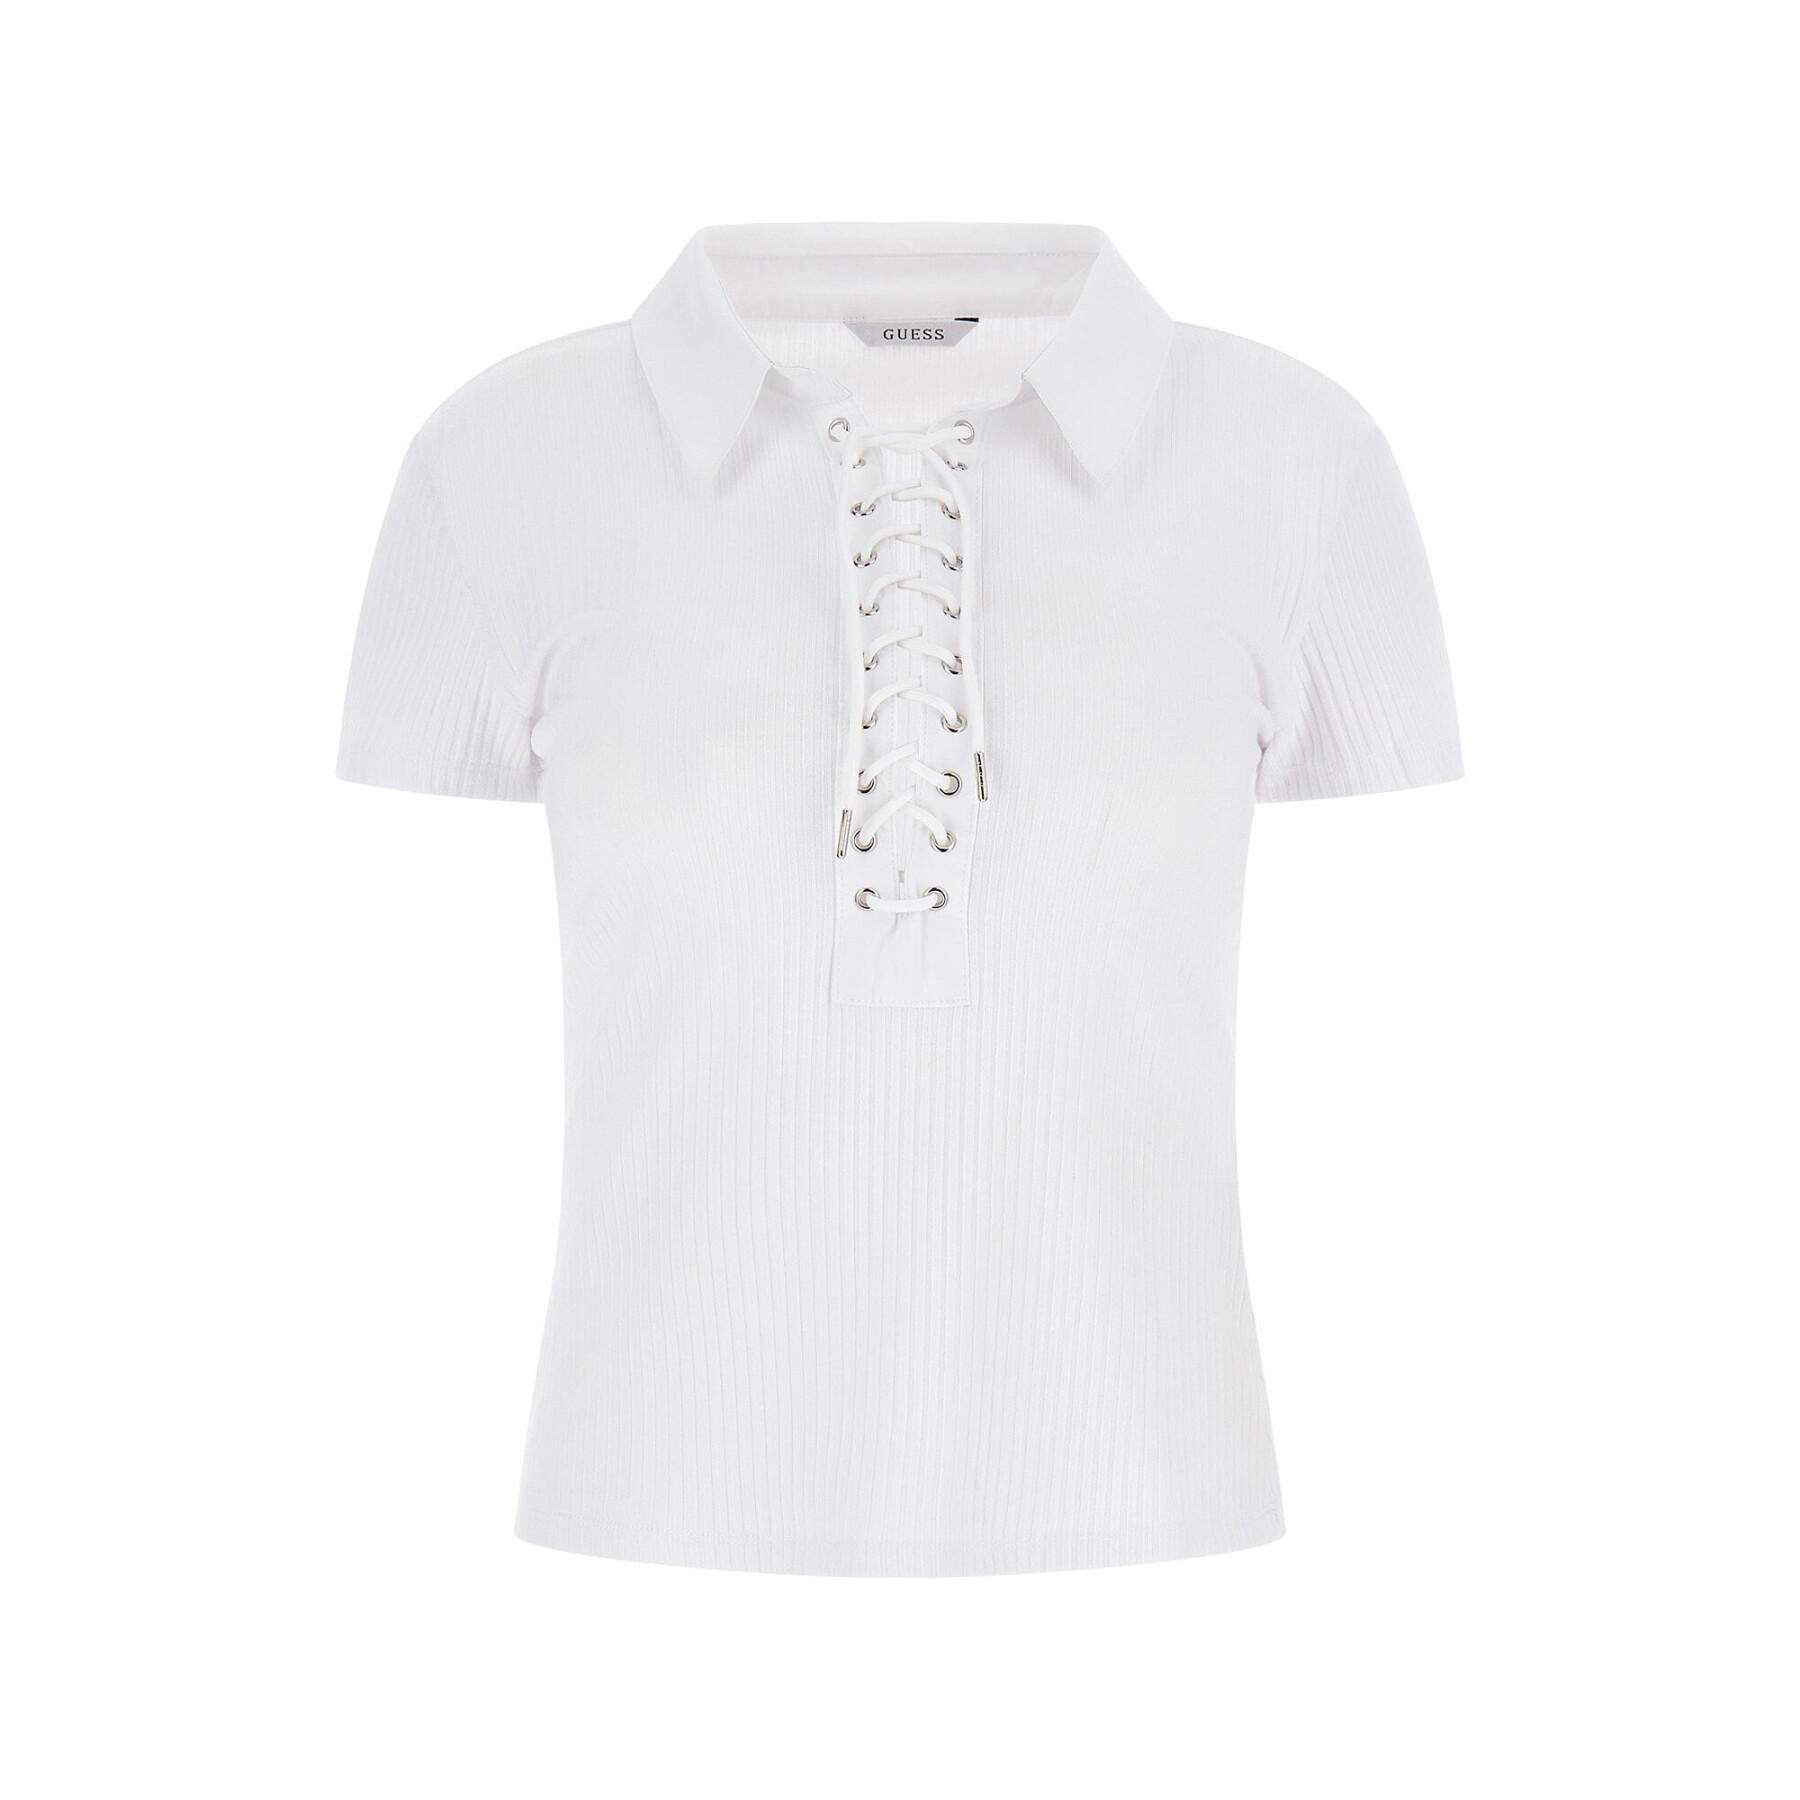 Women's lace-up polo shirt Guess Jordin